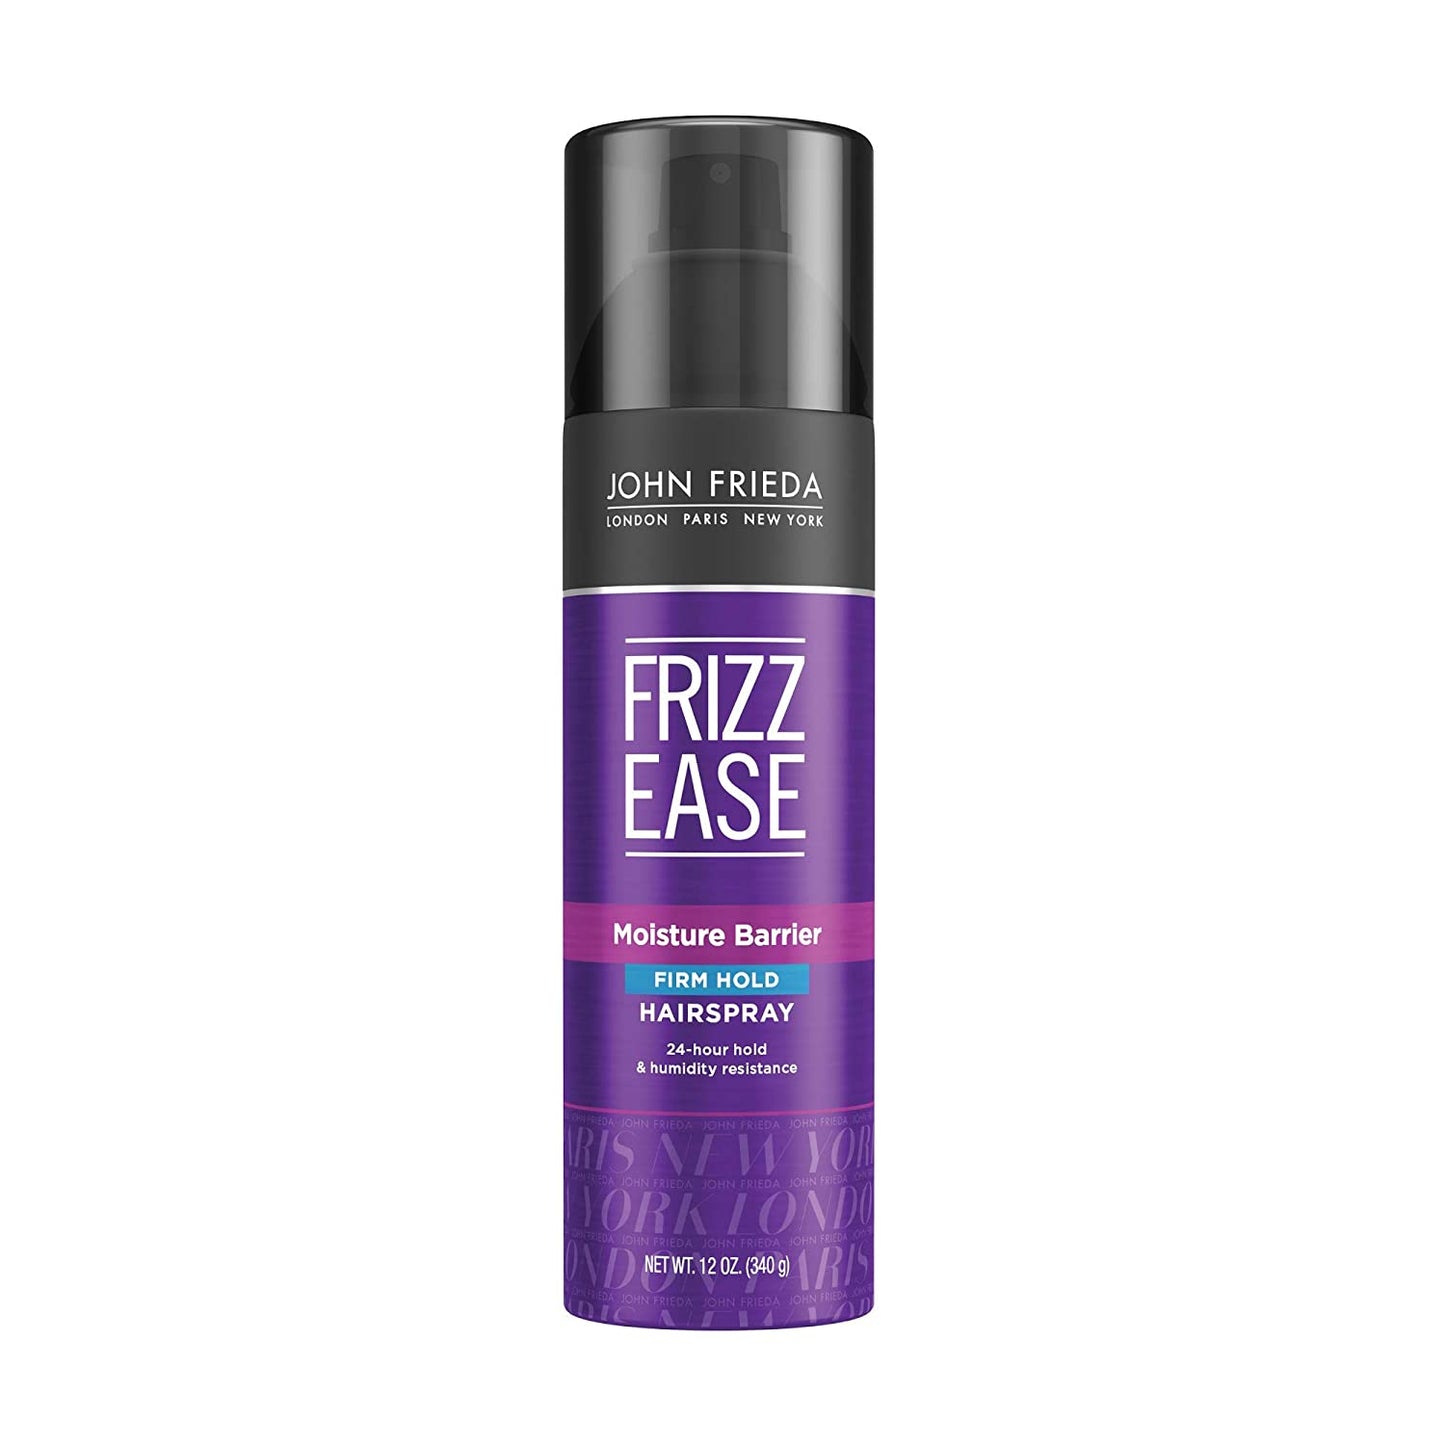 John Frieda Frizz Ease Moisture Barrier Firm Hold Hairspray, 12 oz. / 340g